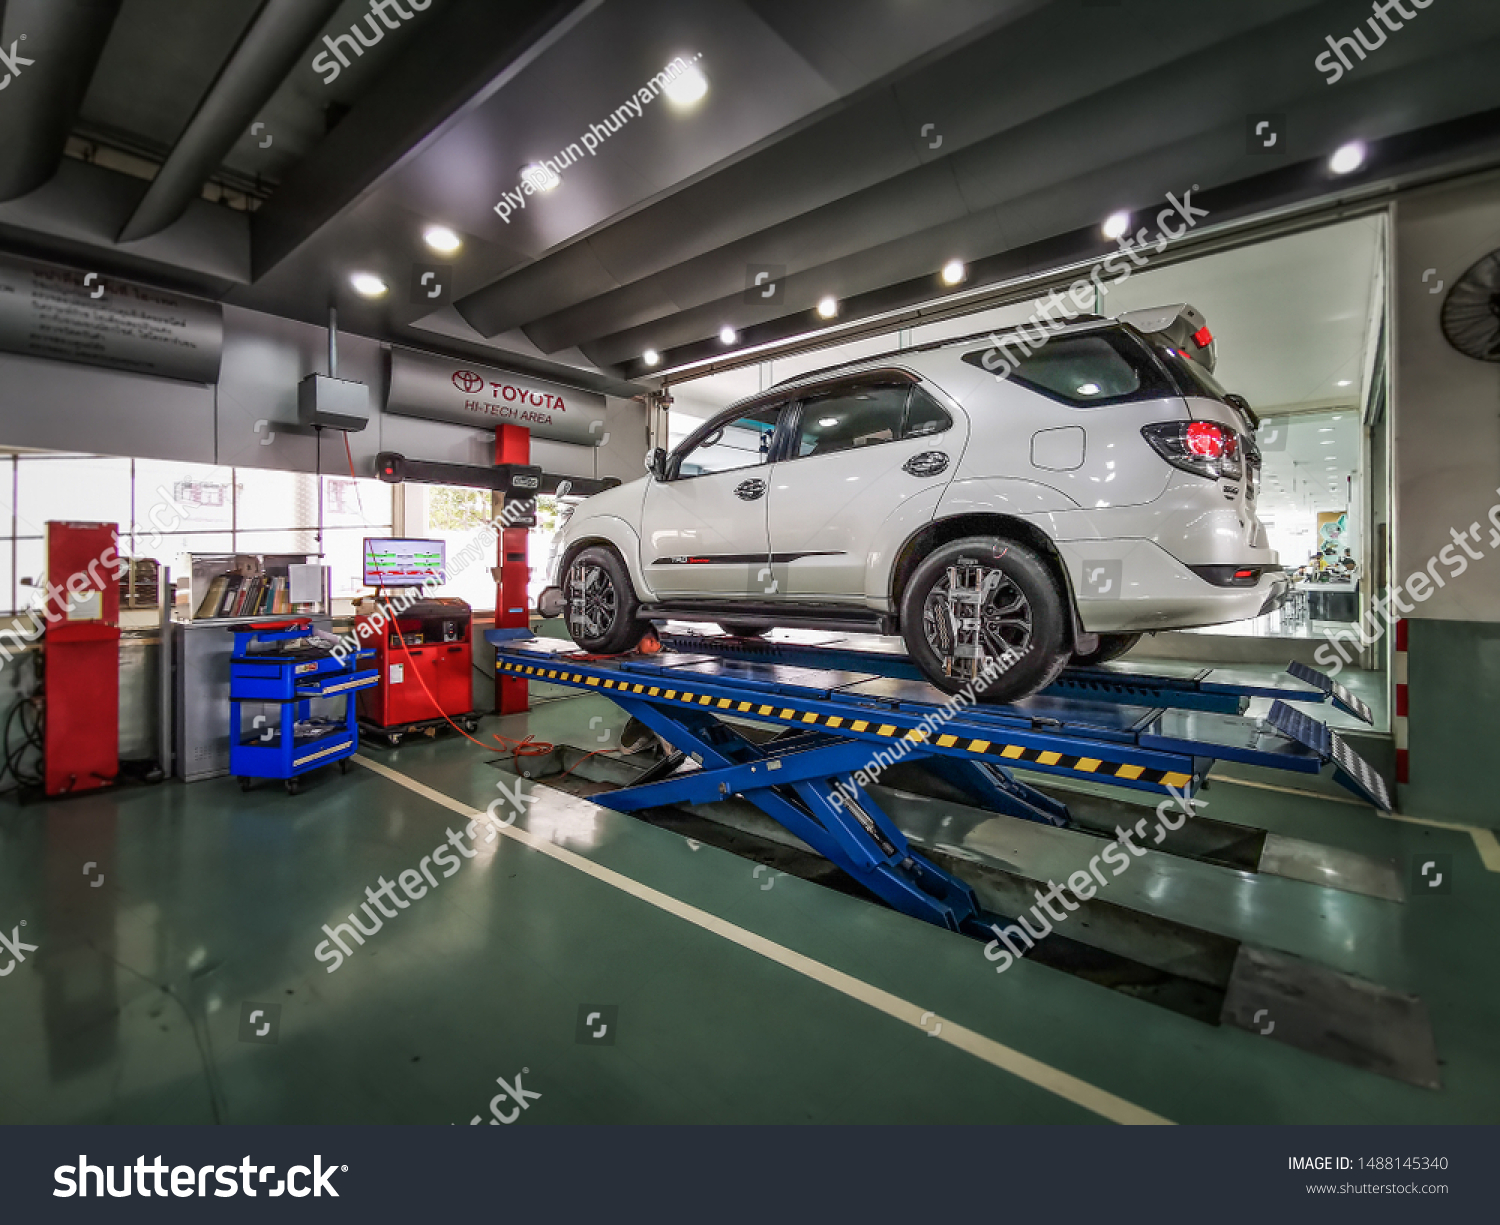 Download Bangkok 2682019 Auto Repair Inspection Toyota Stock Photo Edit Now 1488145340